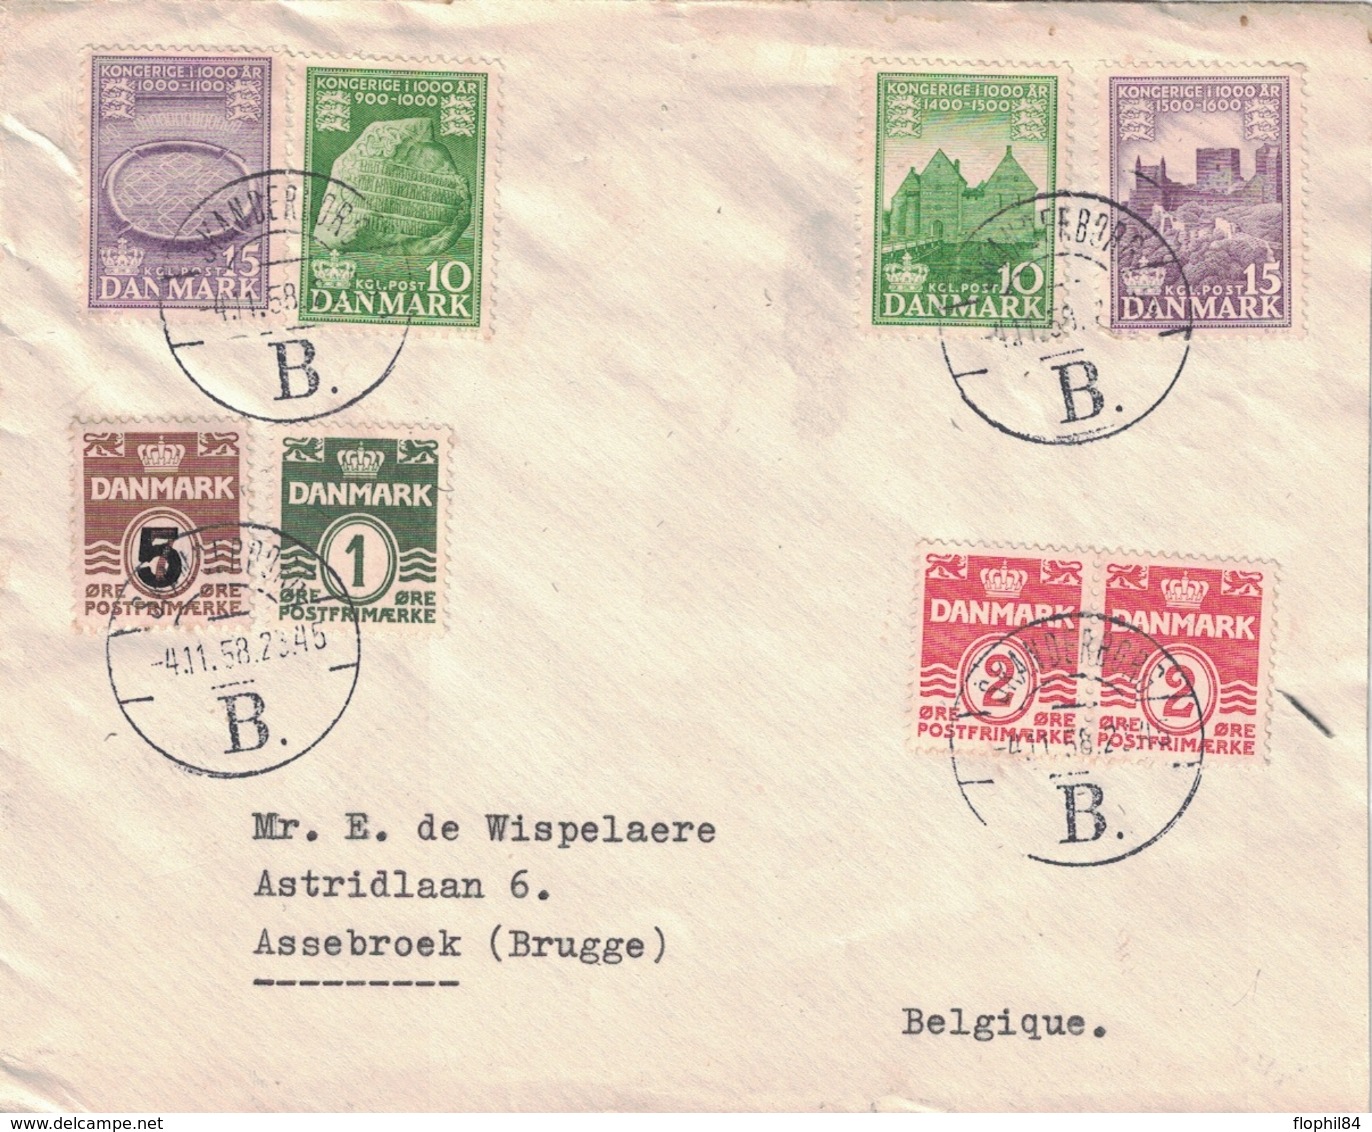 DANEMARK - SKANDERBORG - LE 4 NOVEMBRE 1958 - SUPERBE AFFRANCHISSEMENT POUR LA BELGIQUE. - Briefe U. Dokumente